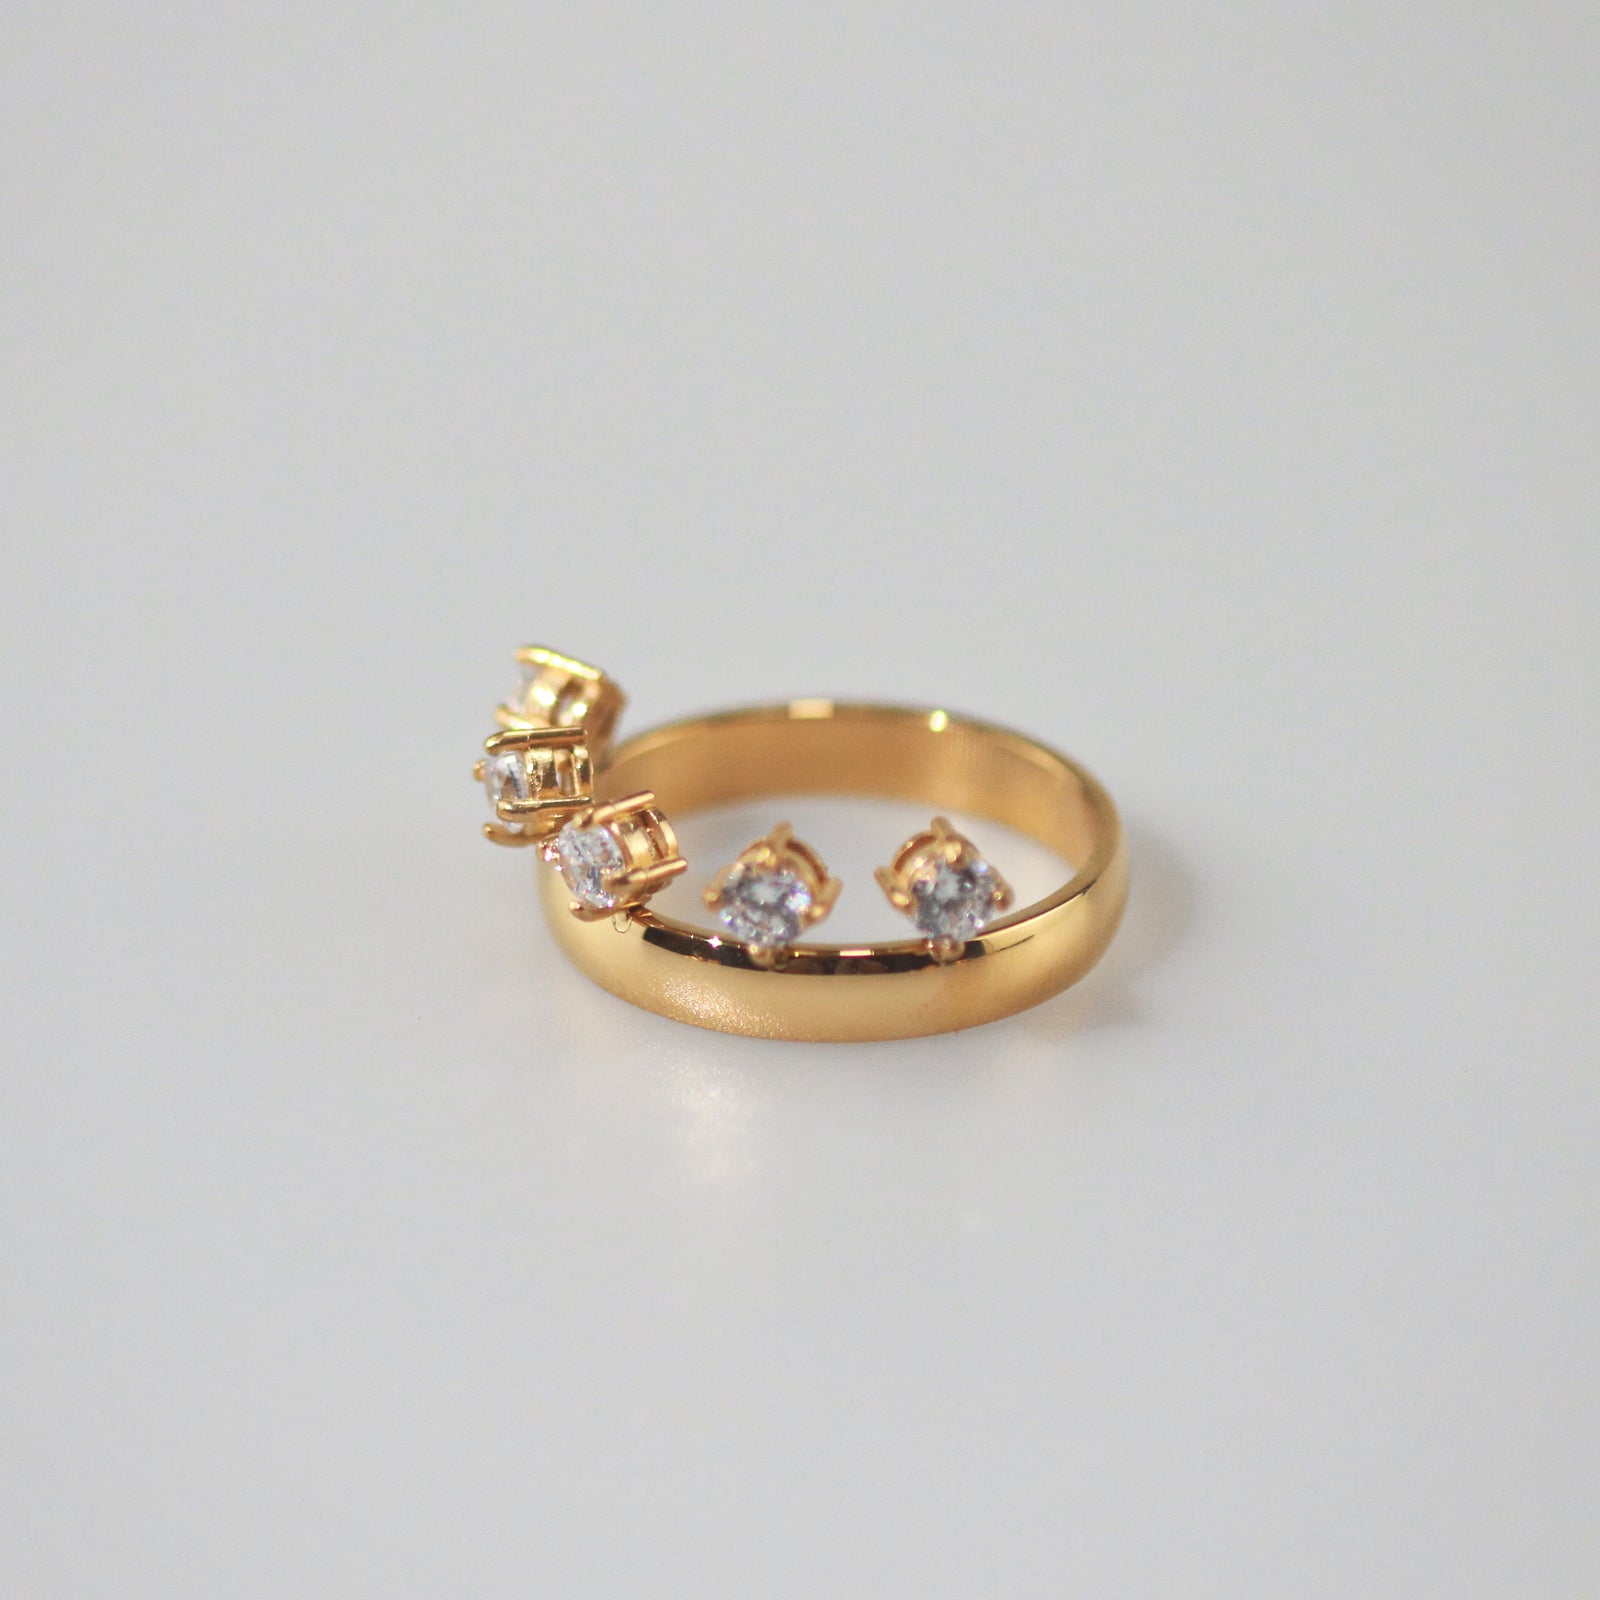 Meideya jewelry crown ring gold